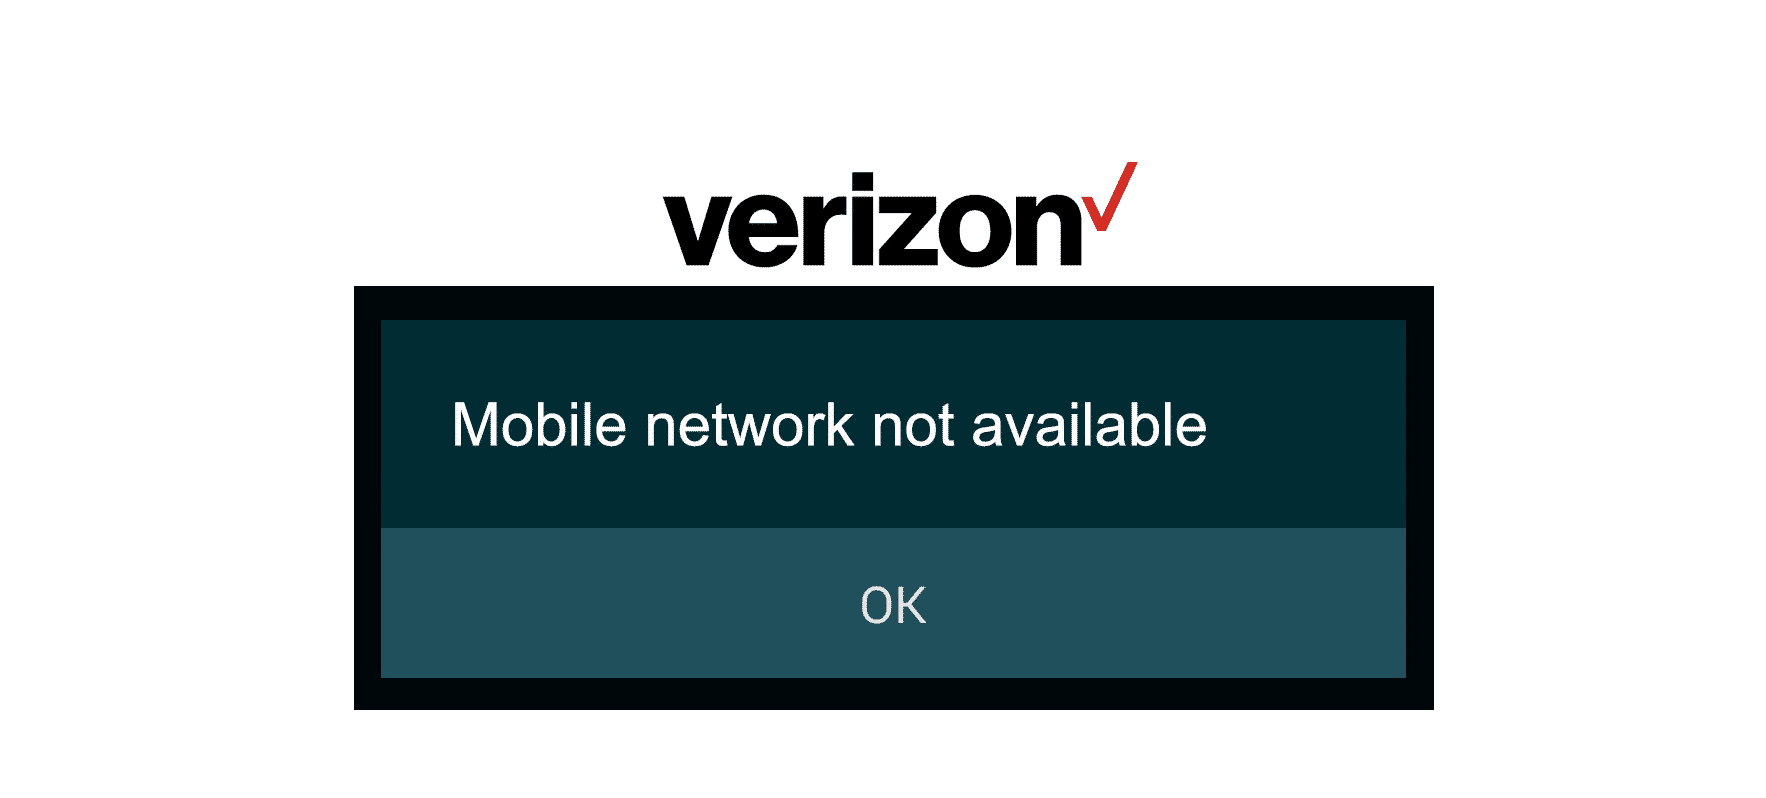 bluestacks mobile network not available